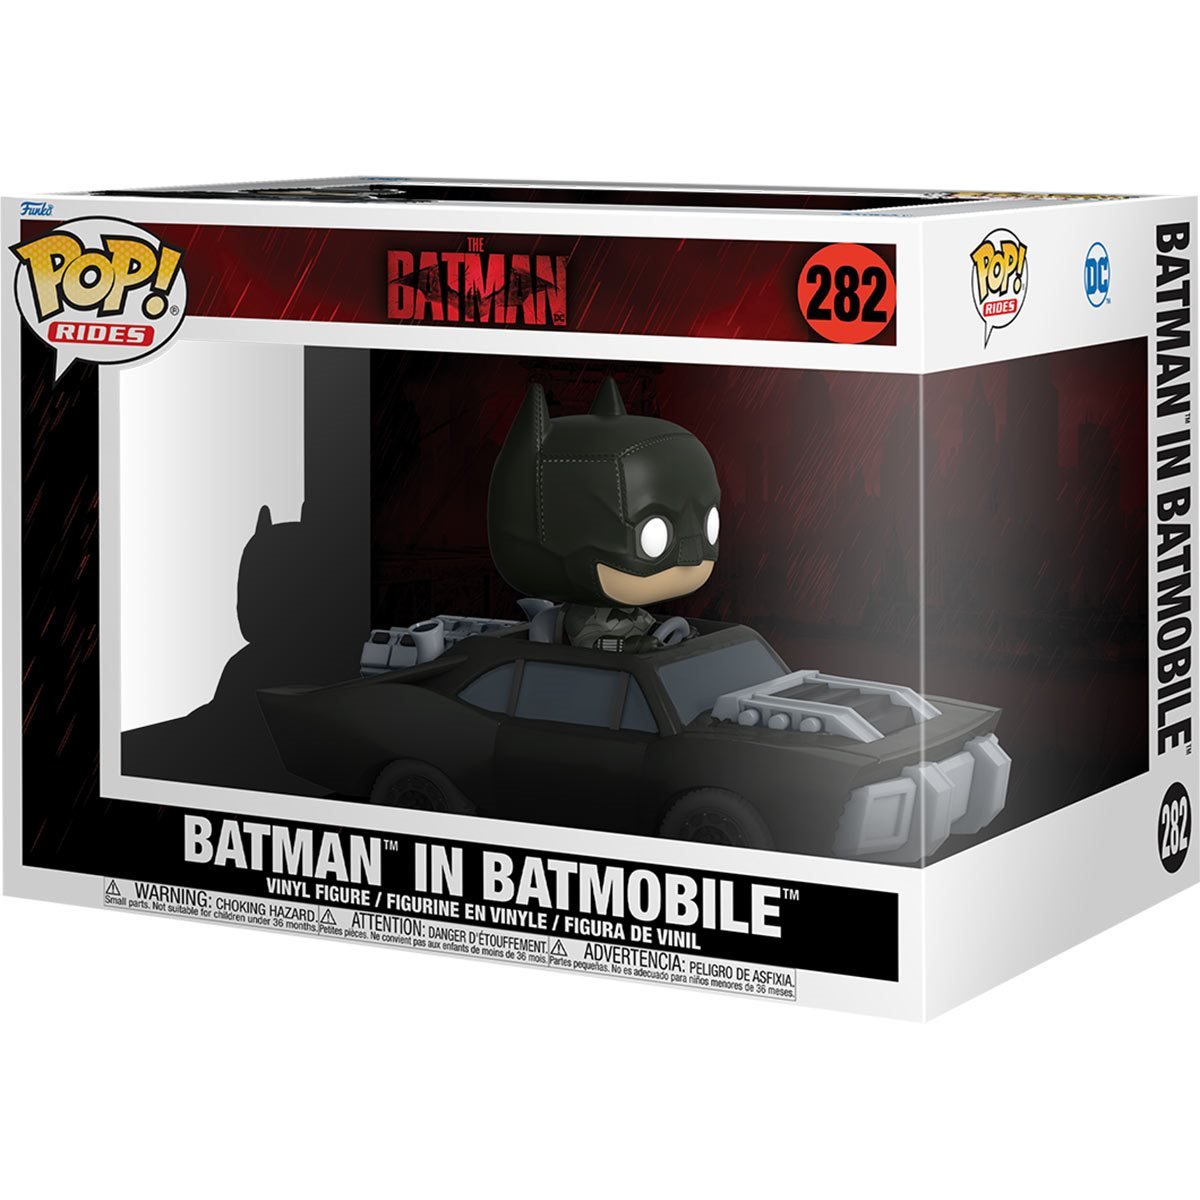 The Batman in Batmobile Super Deluxe Funko Pop! Vinyl Vehicle #282